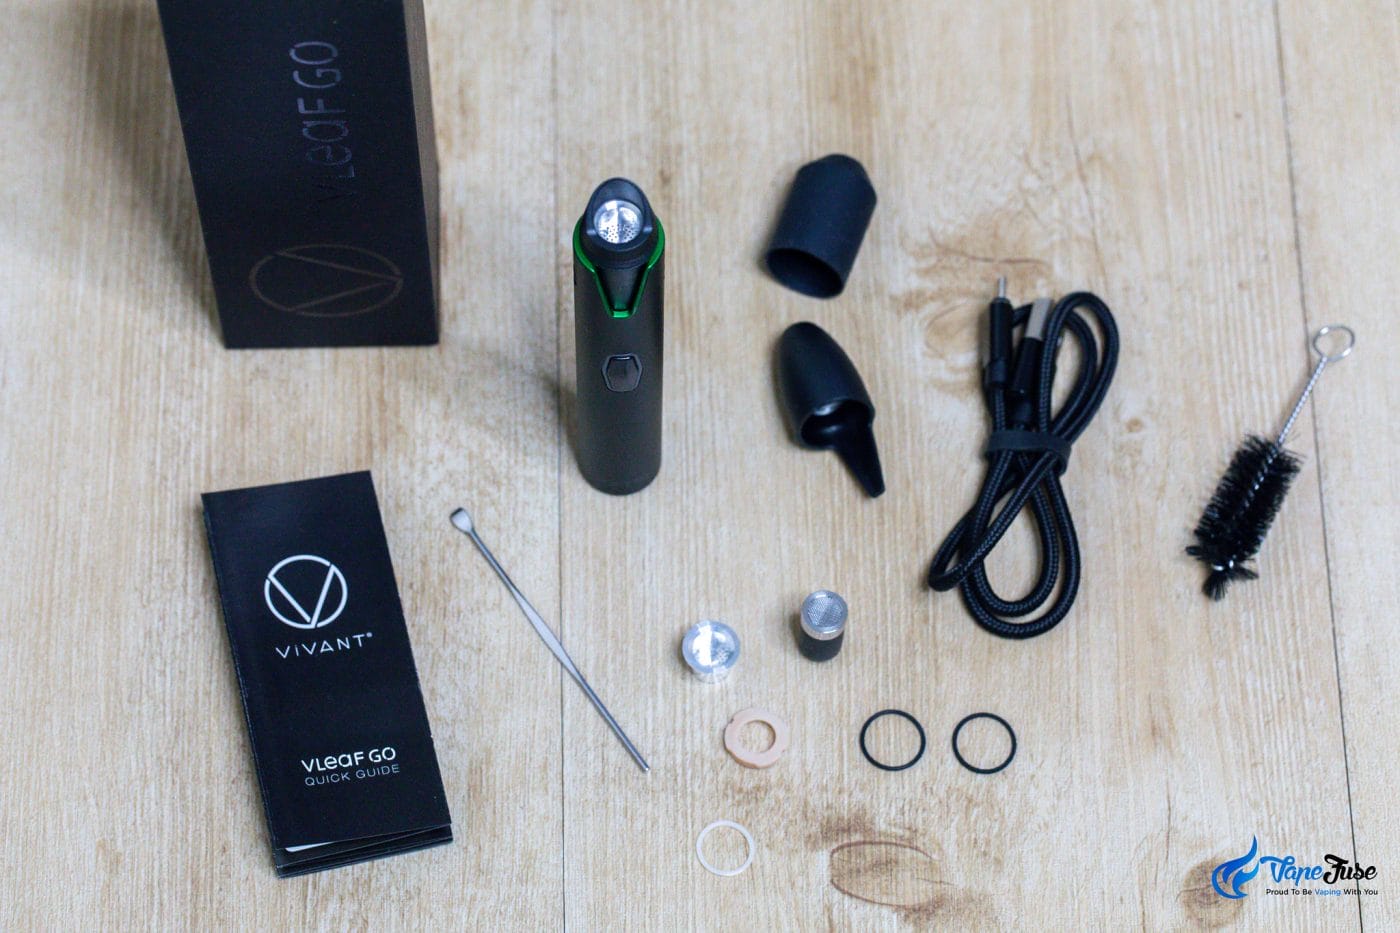 Vivant VLeaF Go vaporizer kit